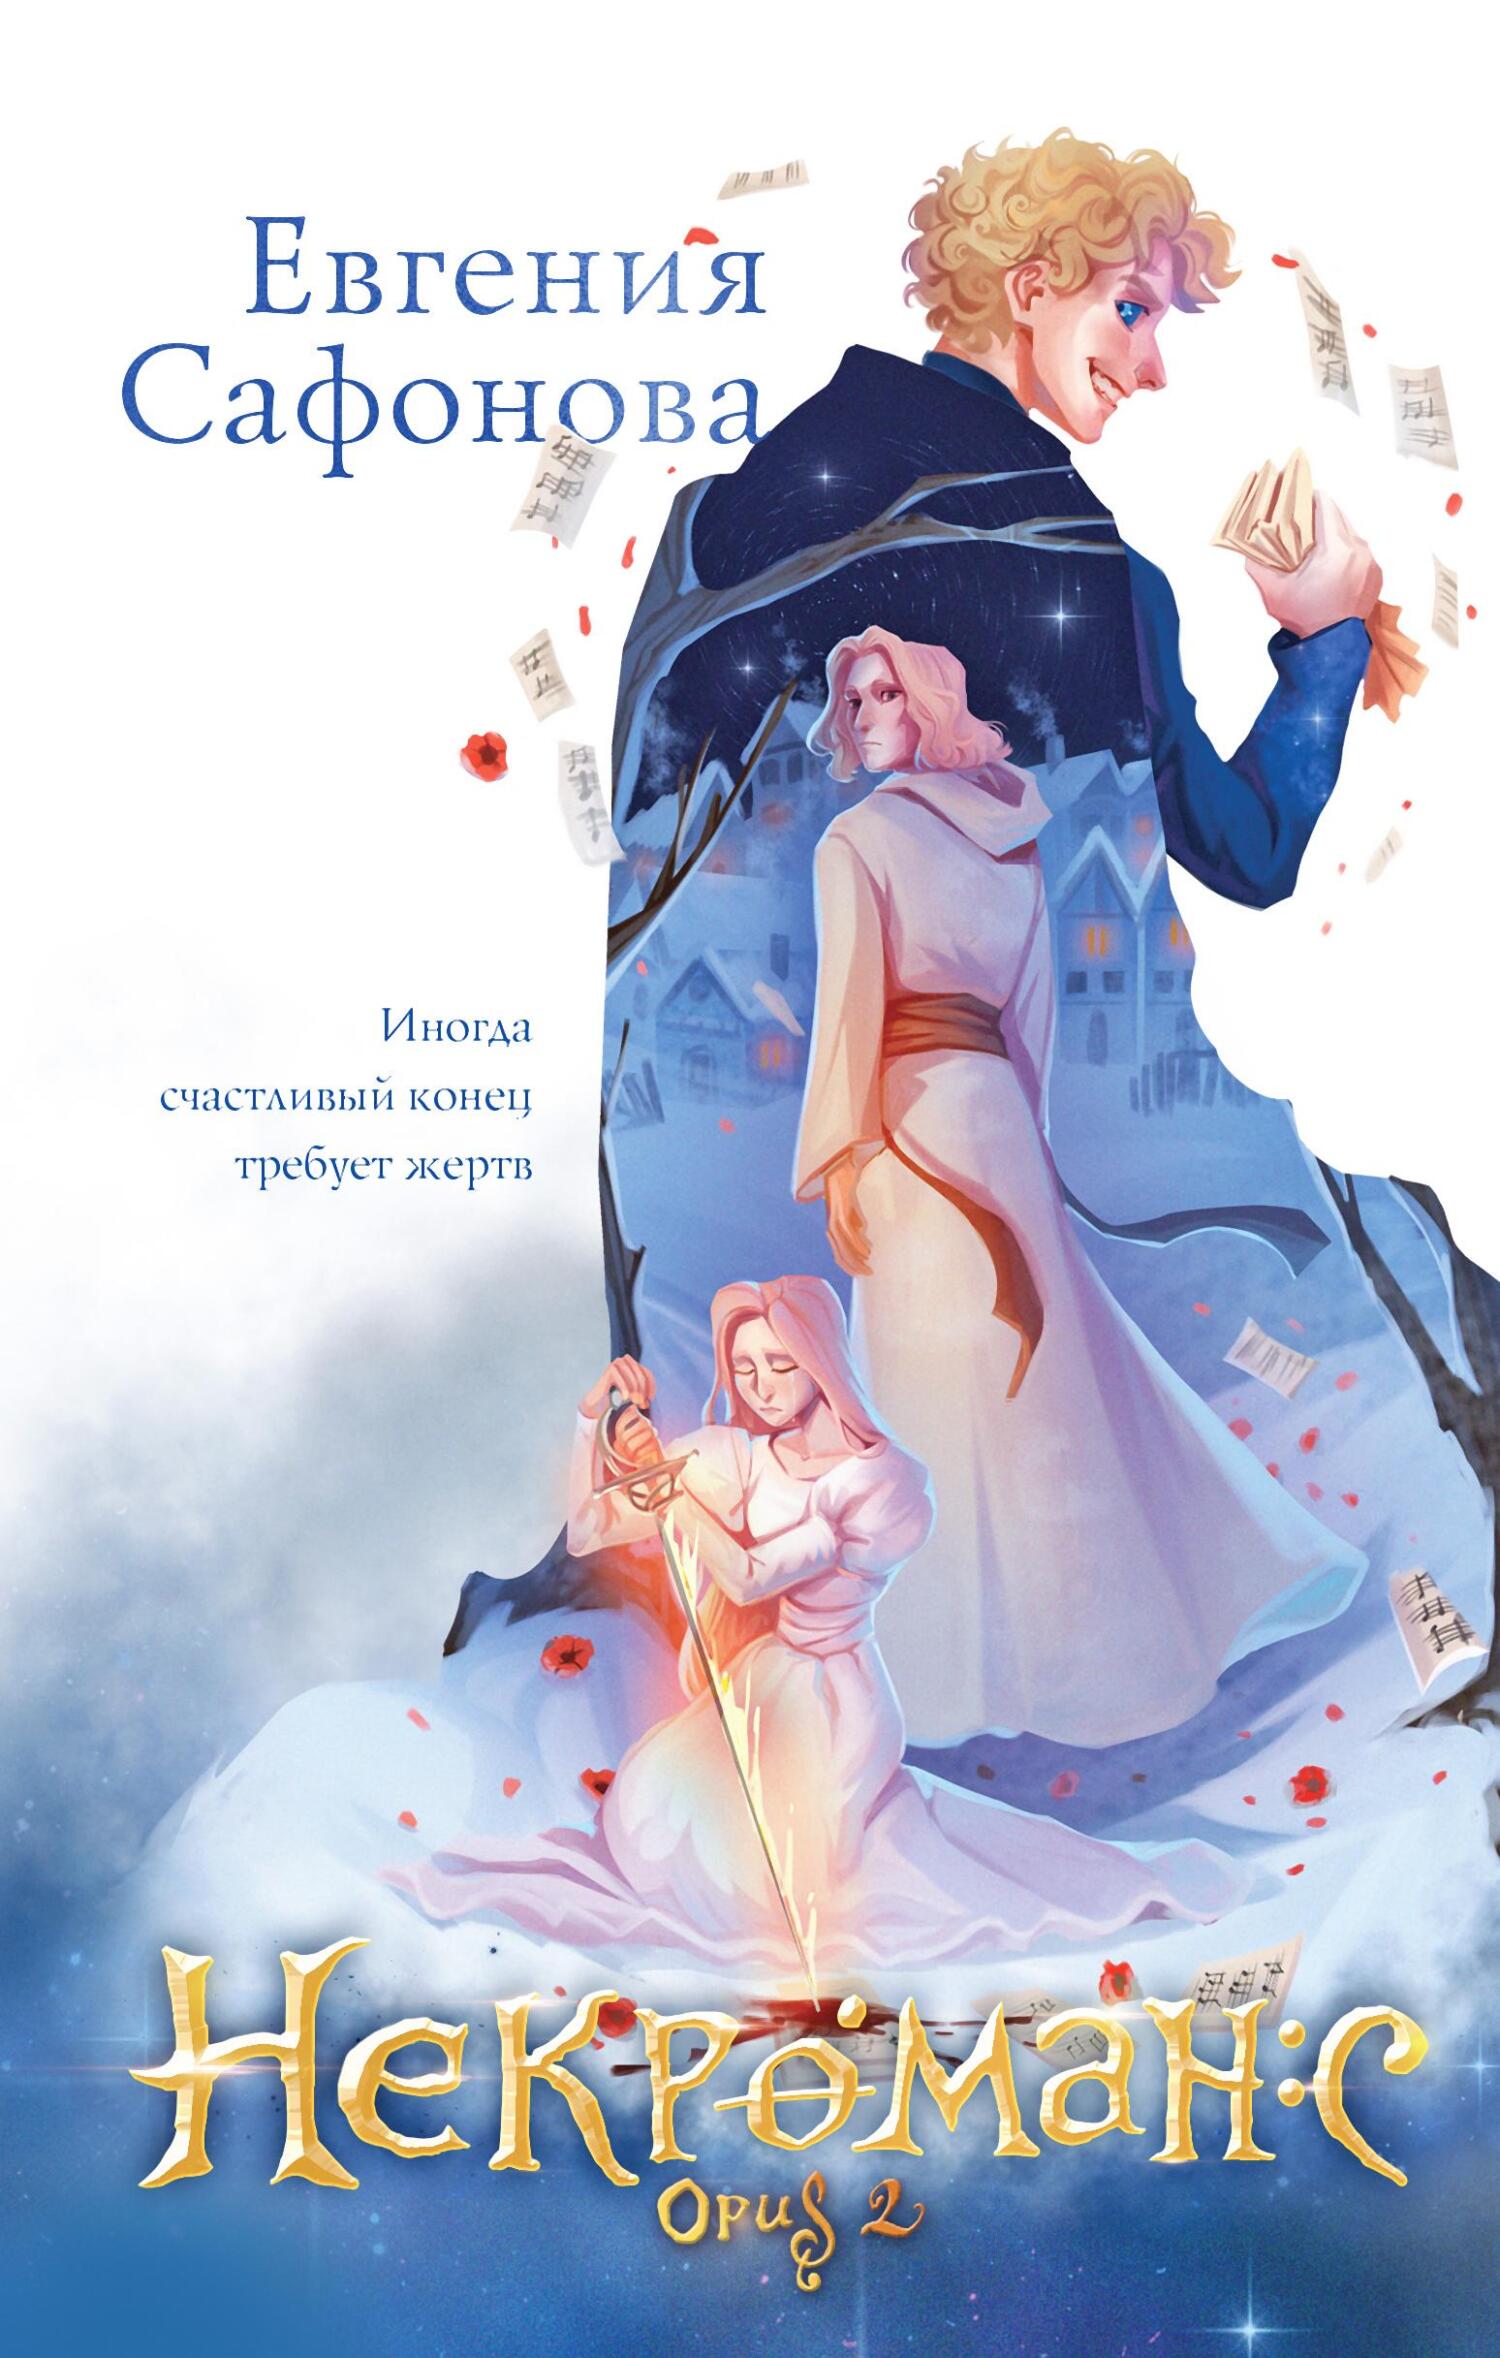 Opus 2 - Евгения Сергеевна Сафонова